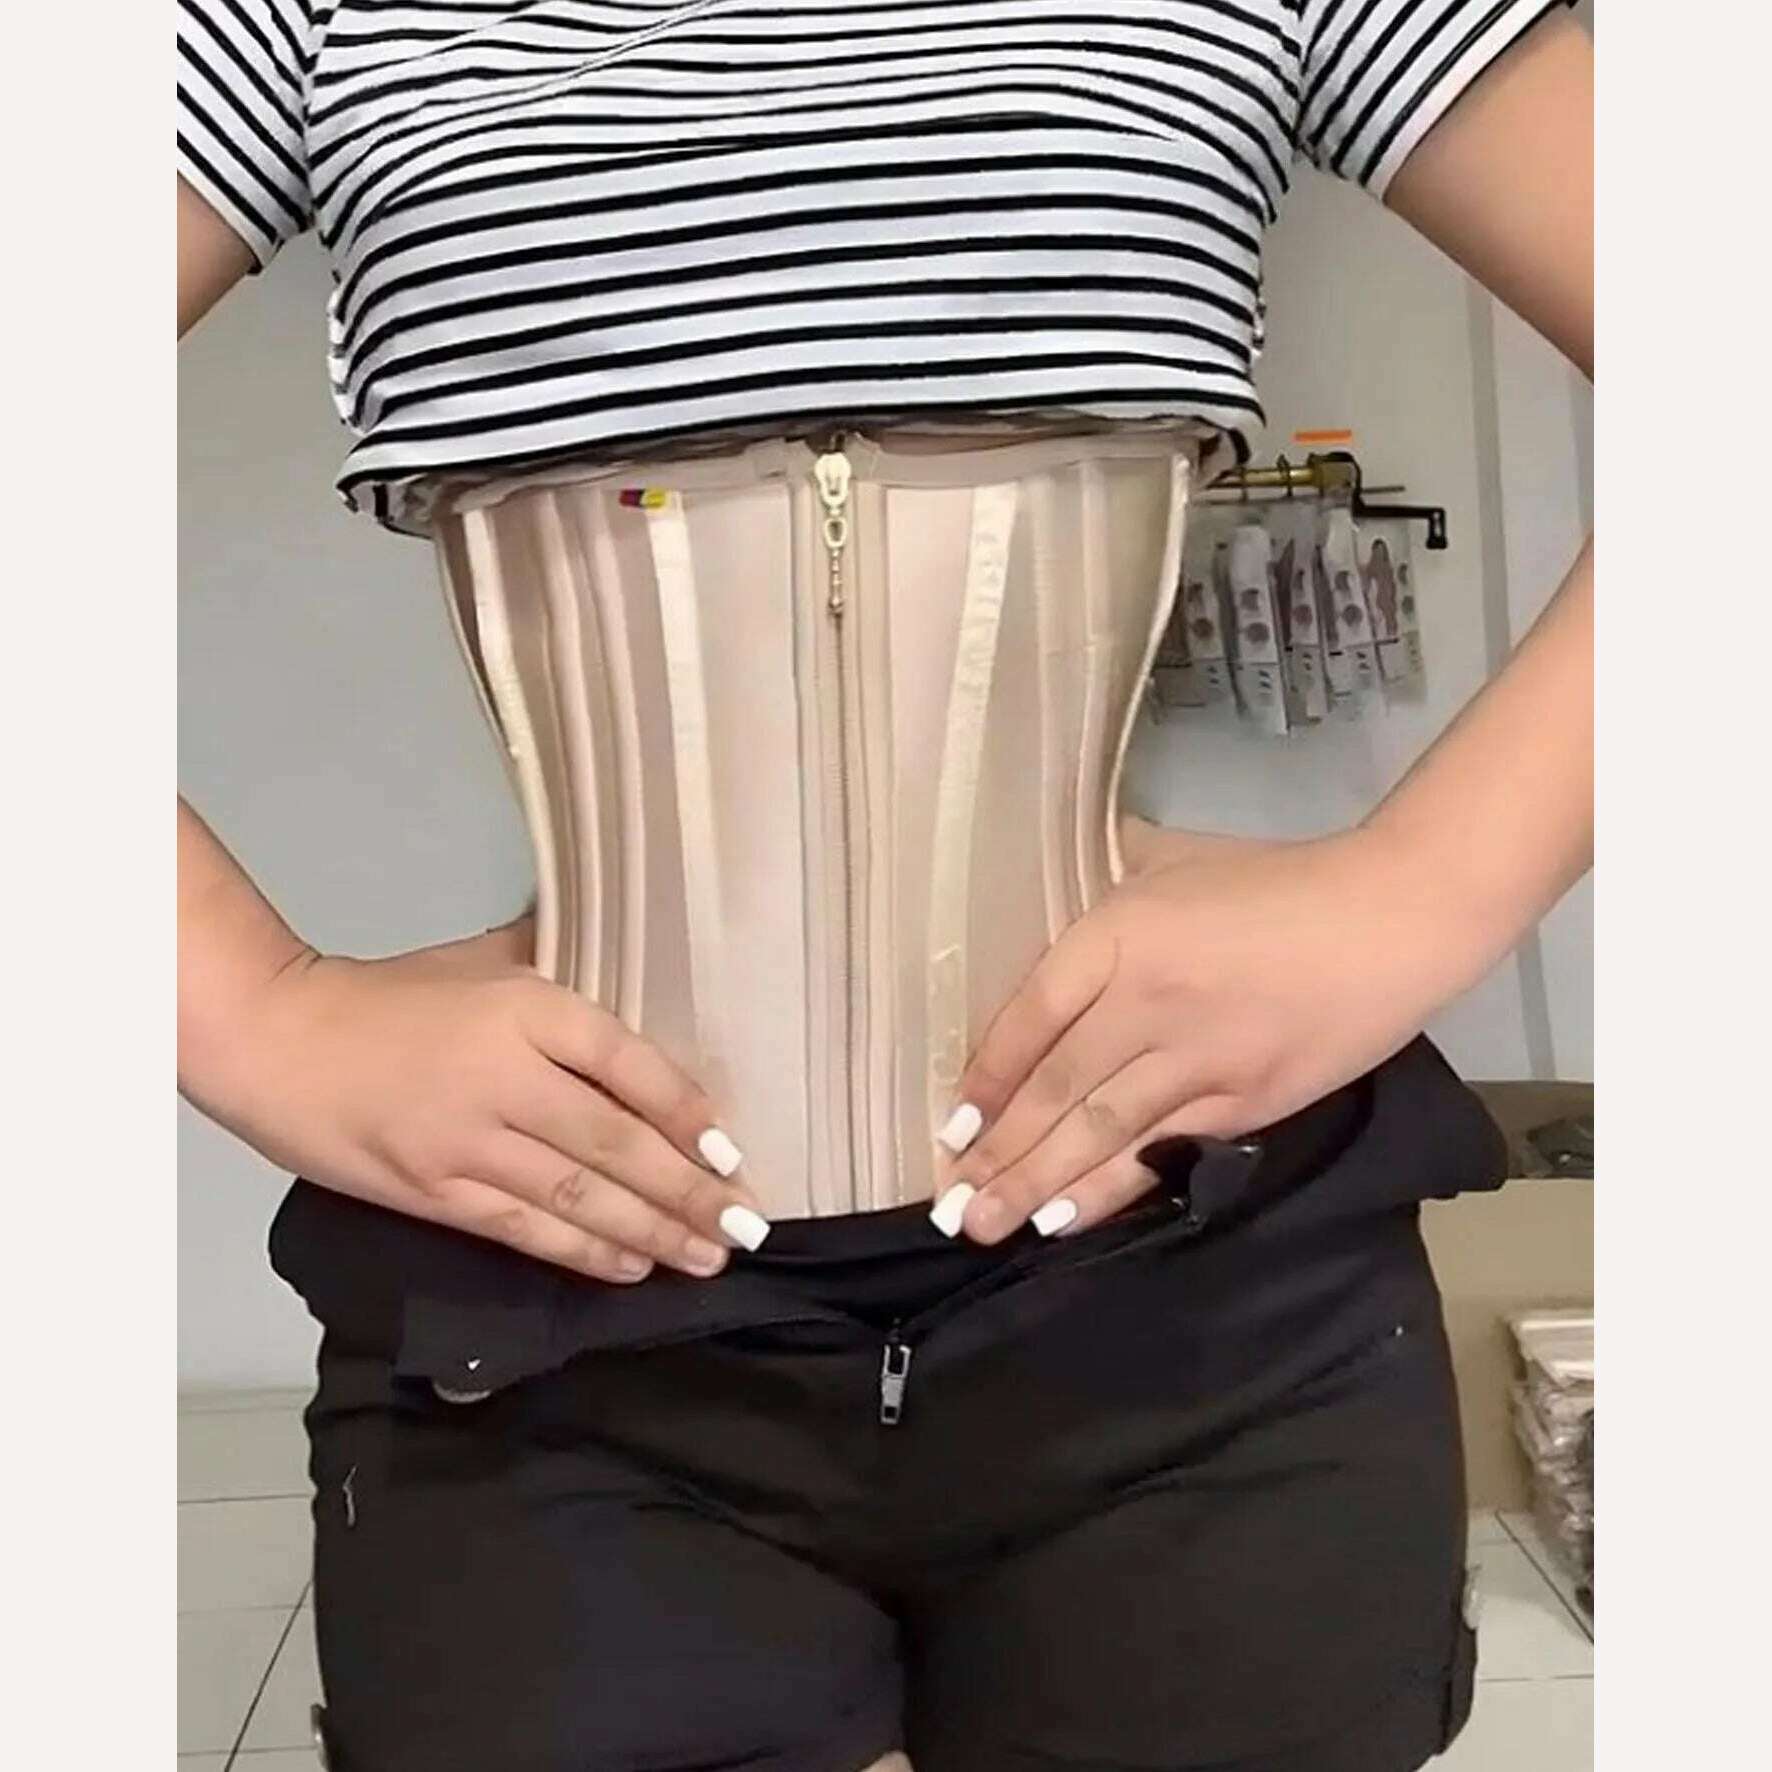 KIMLUD, Waist Trainer Belly Slimming Belt Body Shaper Modeling Strap Fajas Colombianas Shaping Corset Binder Shapewear for Women, Khaki / L, KIMLUD Women's Clothes